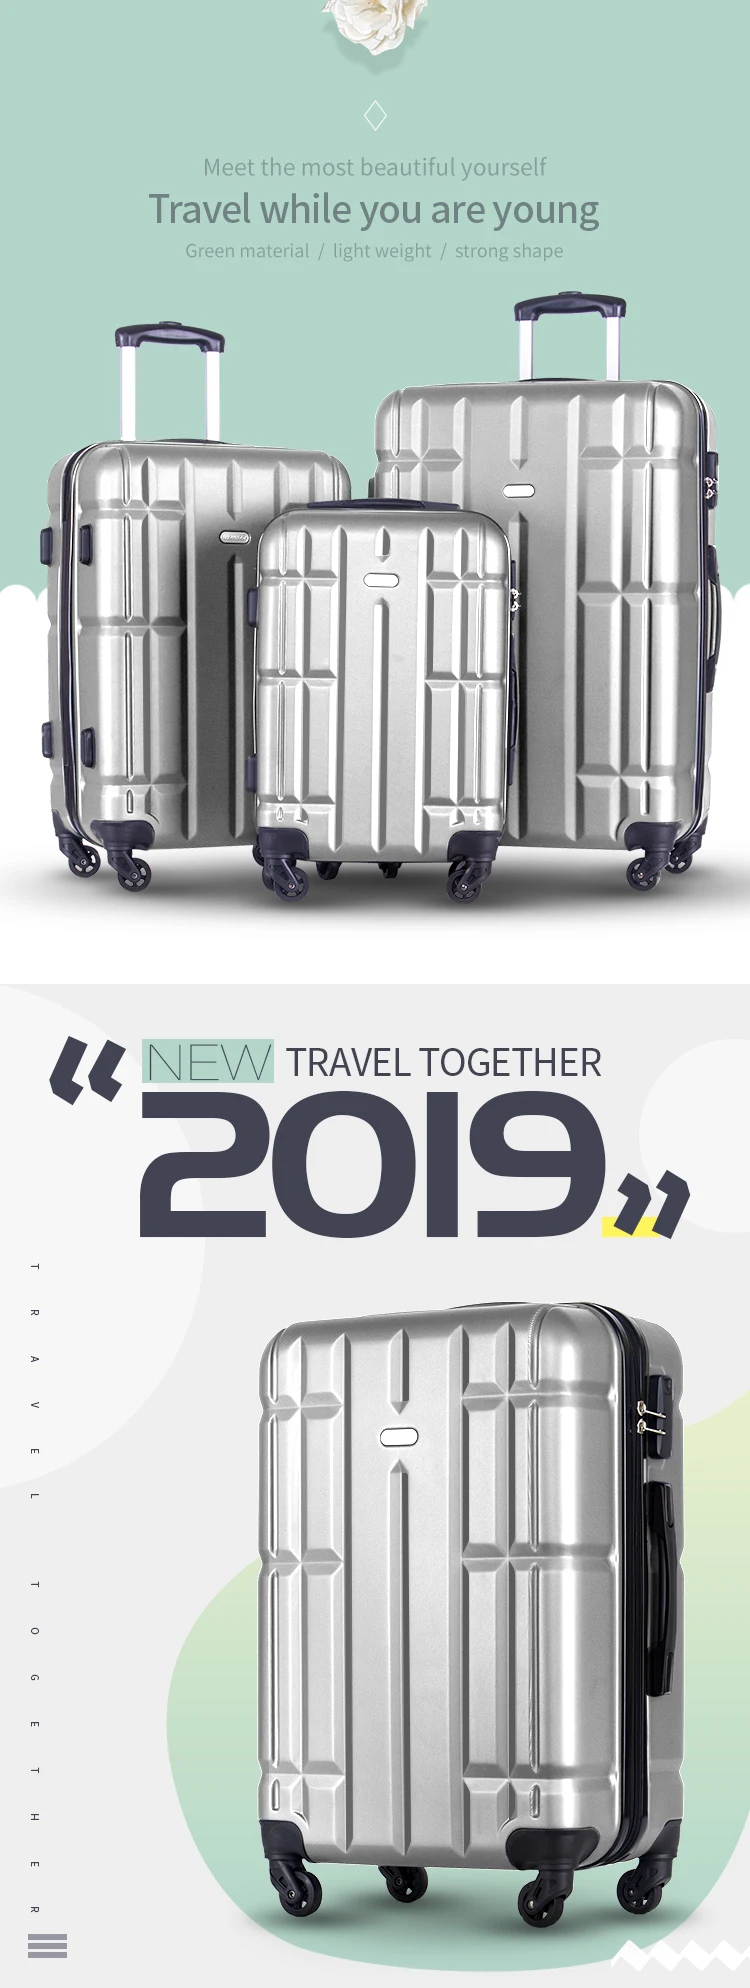 Eminent Hard Case Travel Bag Makrolon Polycarbonate Luggage Trolley  Lightweight Expandable Zipper Suitcase 4 Quiet Wheels With TSA Lock KG82  Turquoise | DubaiStore.com - Dubai